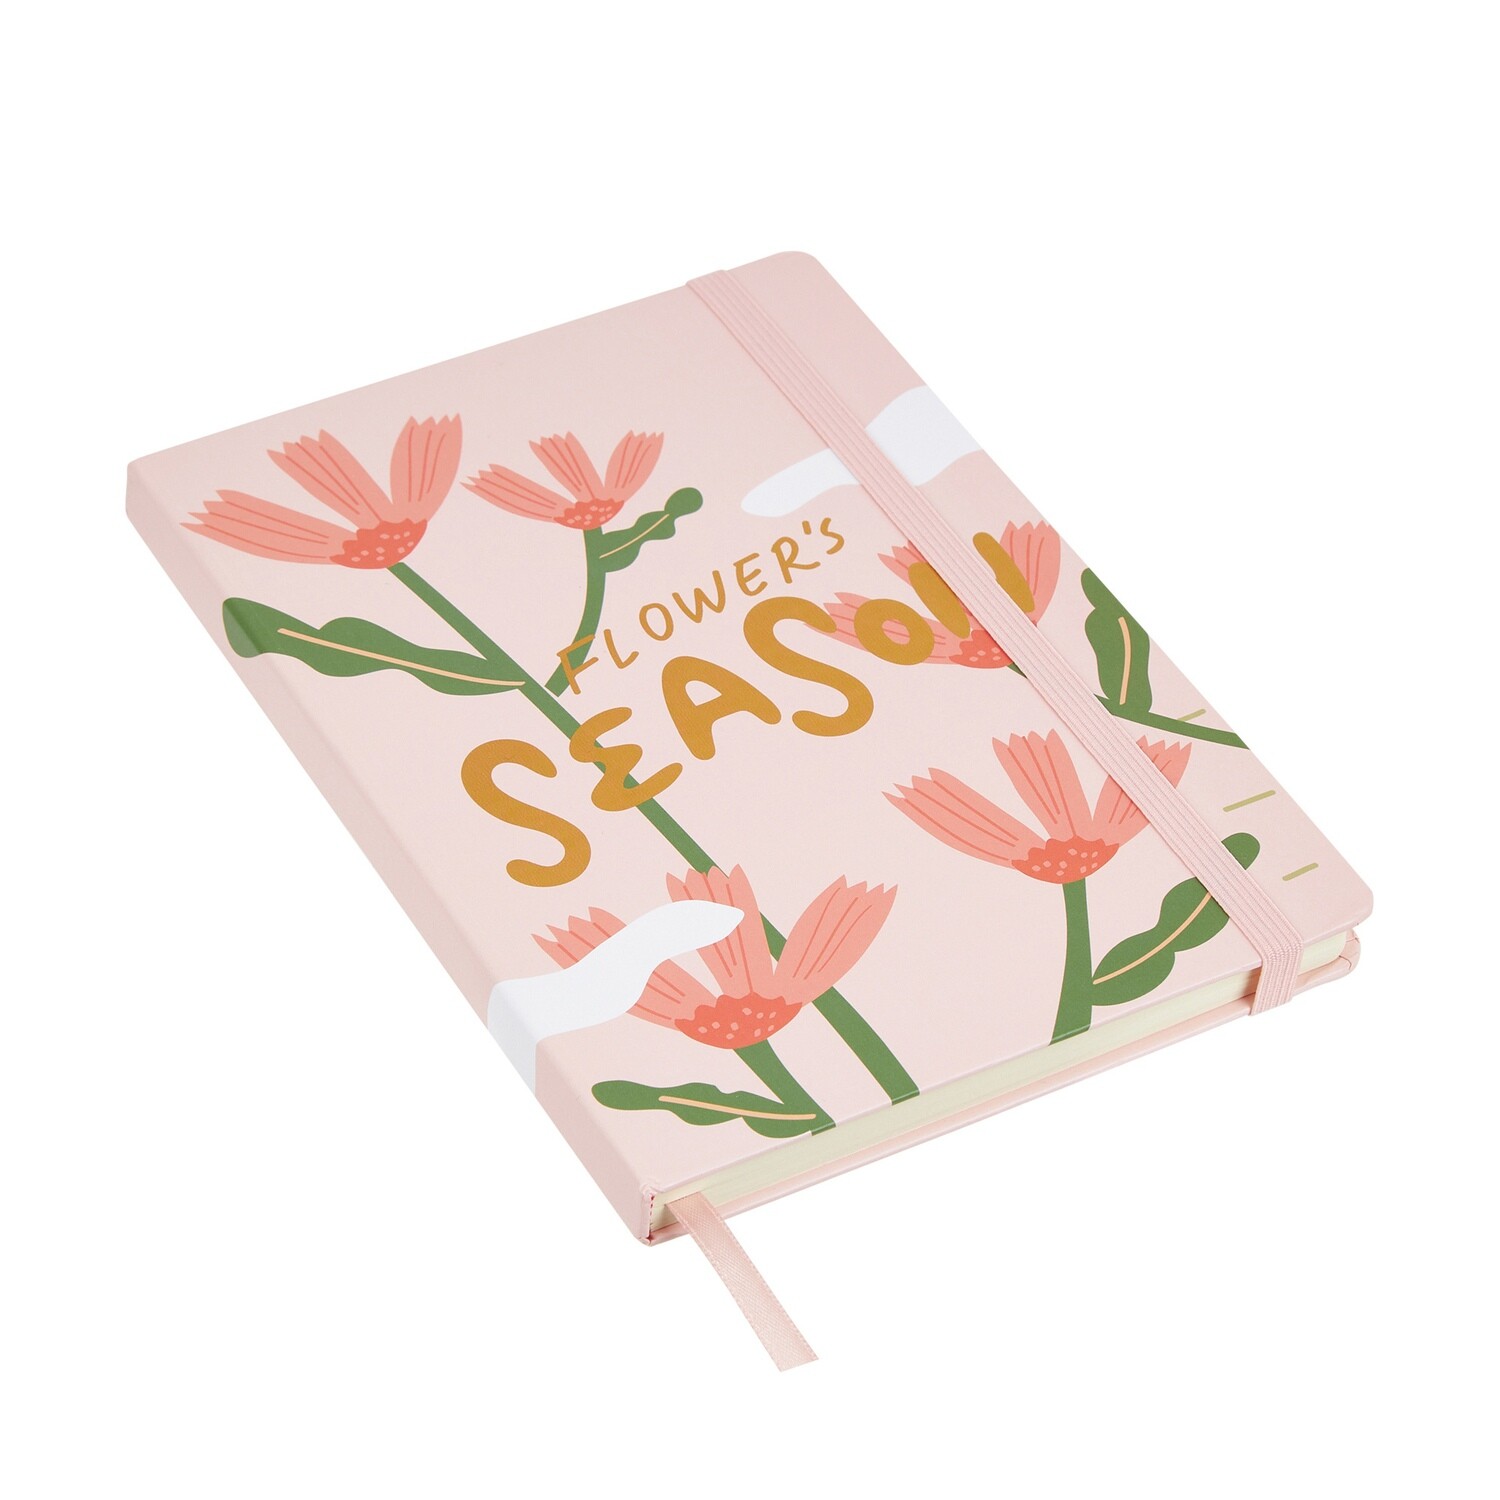 Spring - Hardbound Lined Journal A5 Notebook